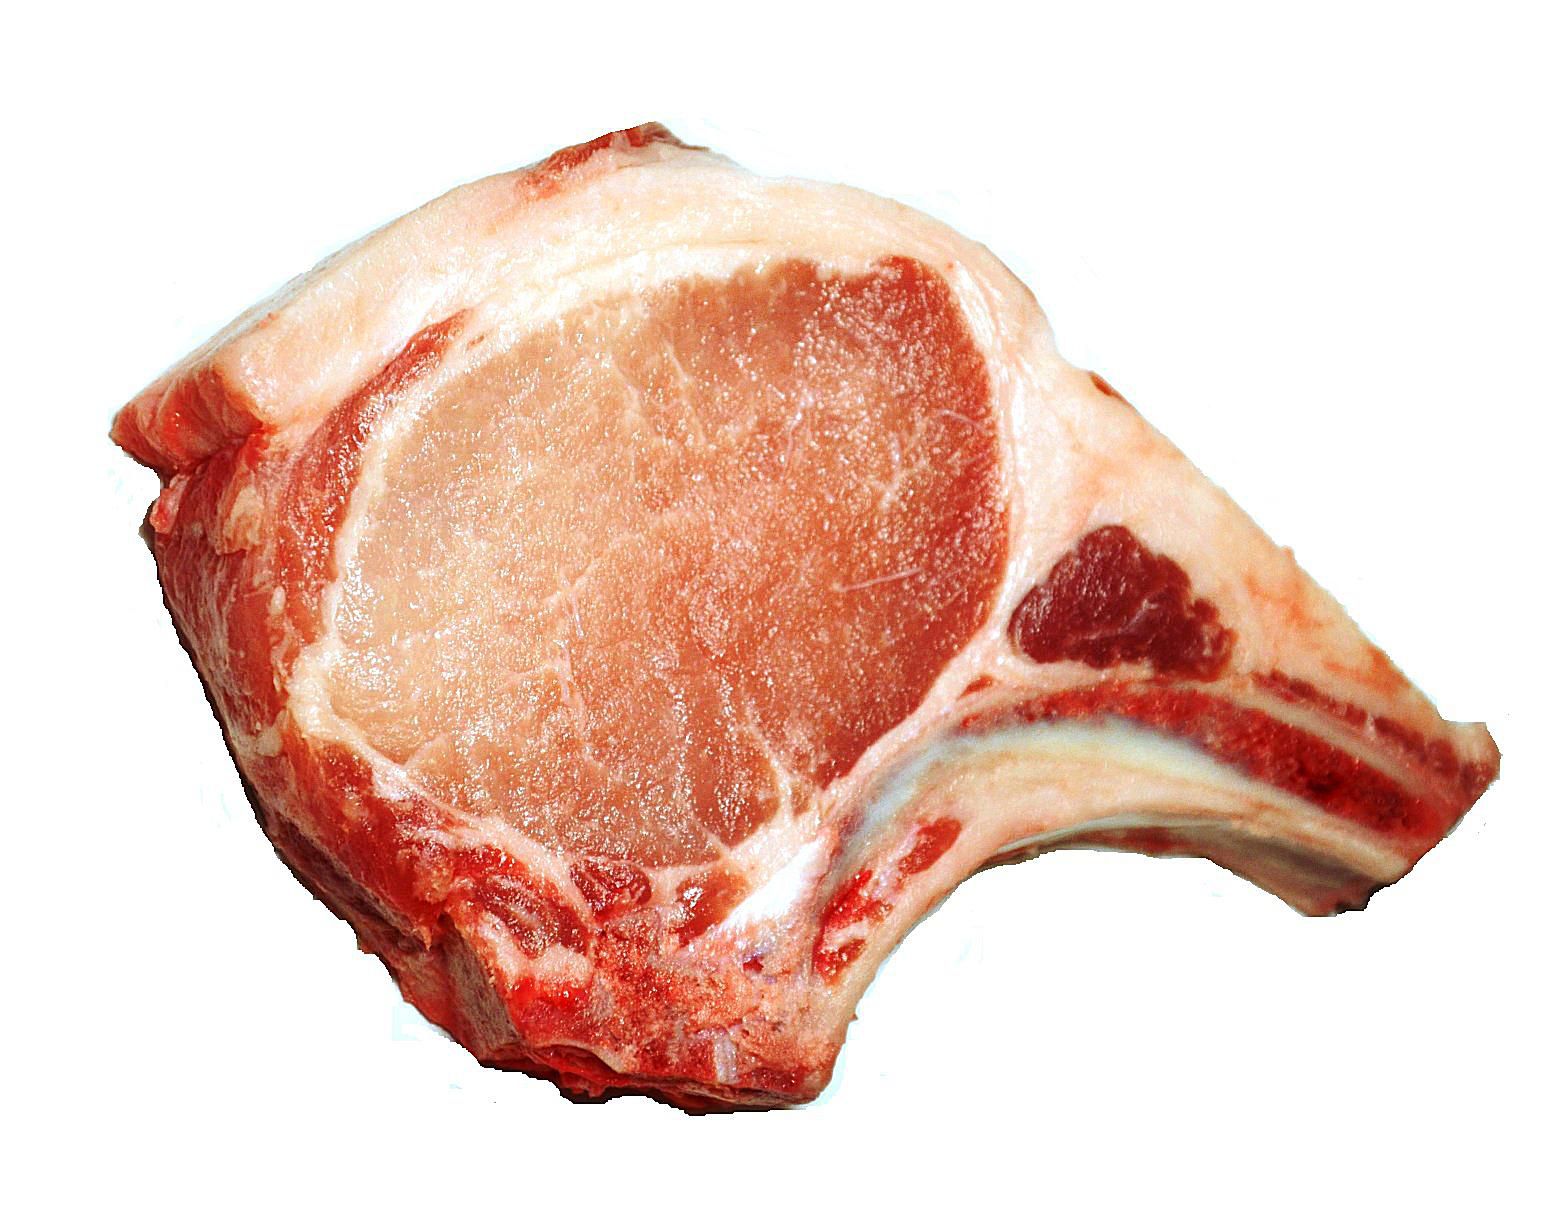 Pork Loin Center Cut Chops / Pork Center Cut Loin Chops Thin Boneless, 1.0 - 2.2 lb ... - Amount of cholesterol in boneless center cut pork loin chop: